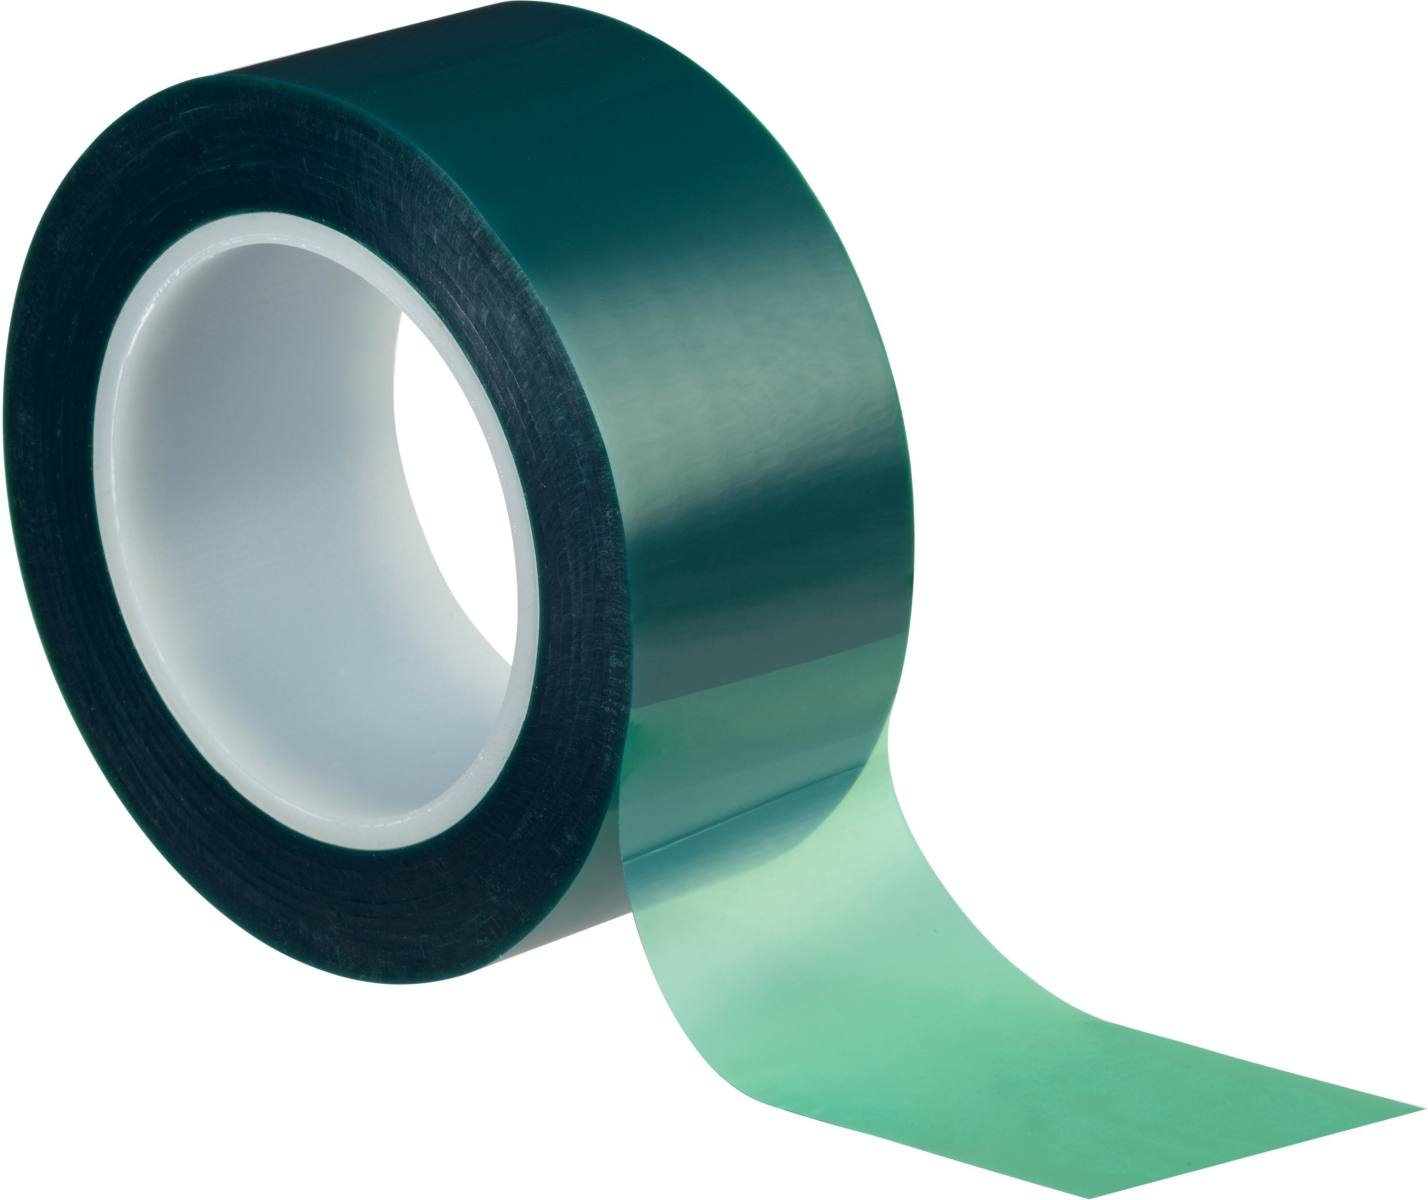 3M polyester masking tape 8992, green, 150 mm x 66 m